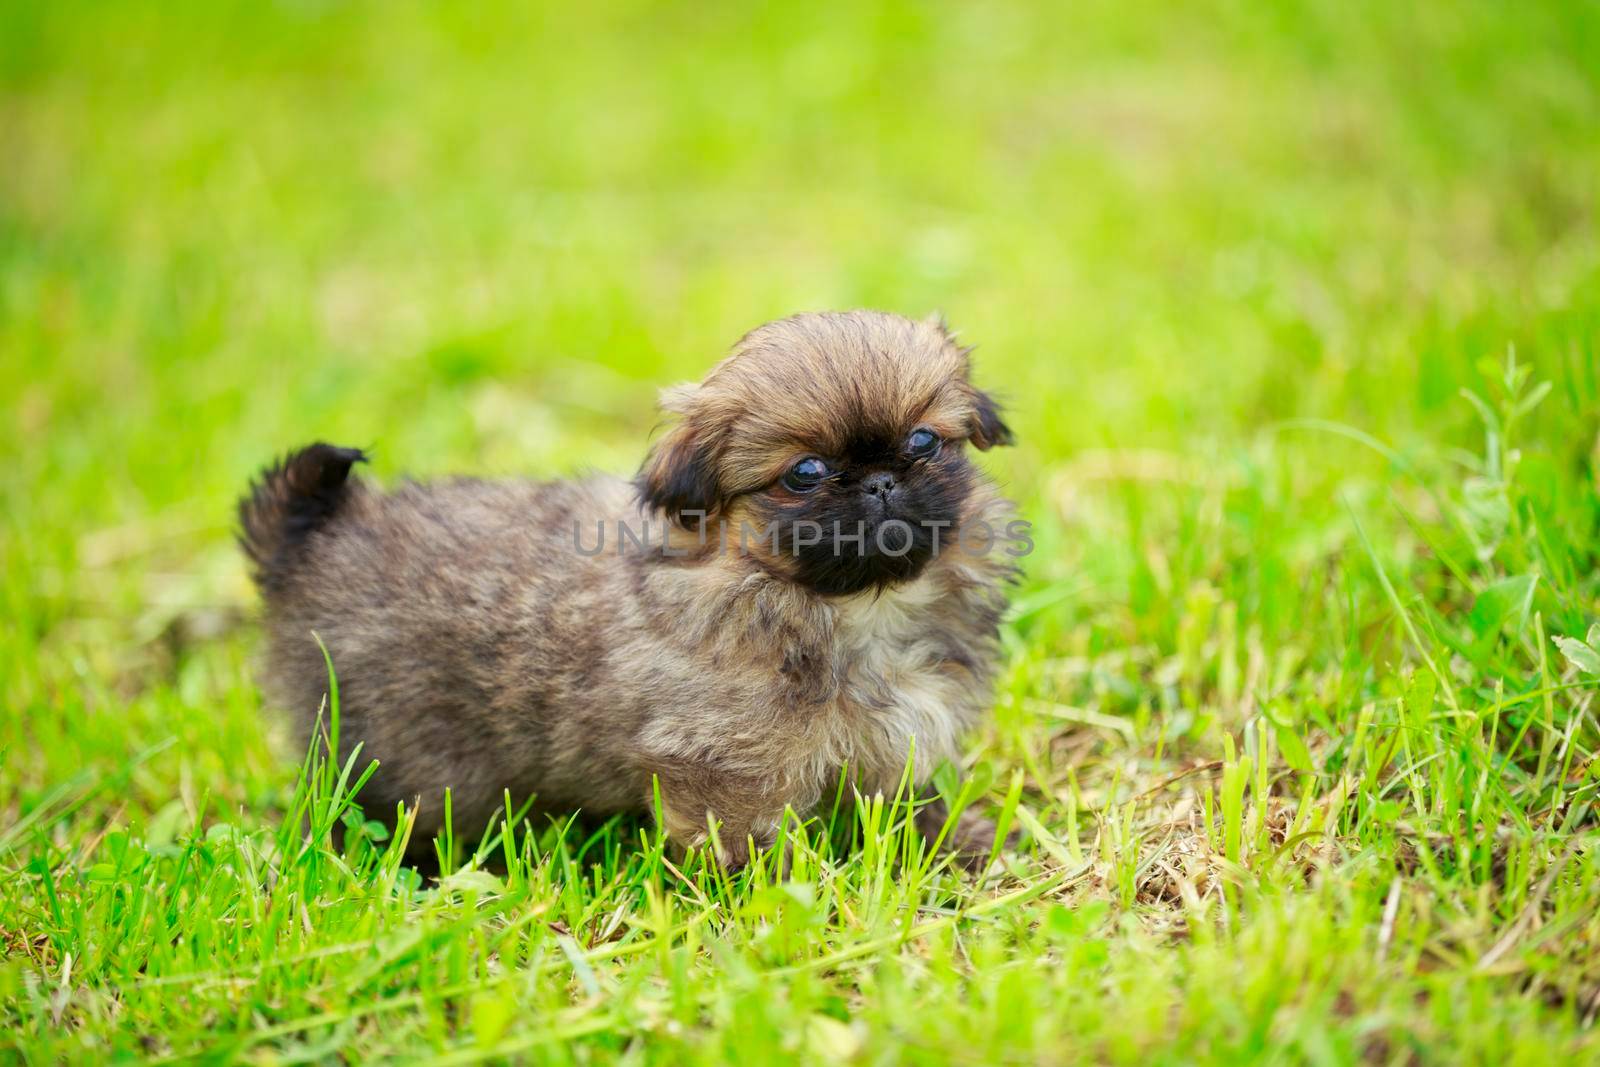 Pekingese puppy in the grass by zokov